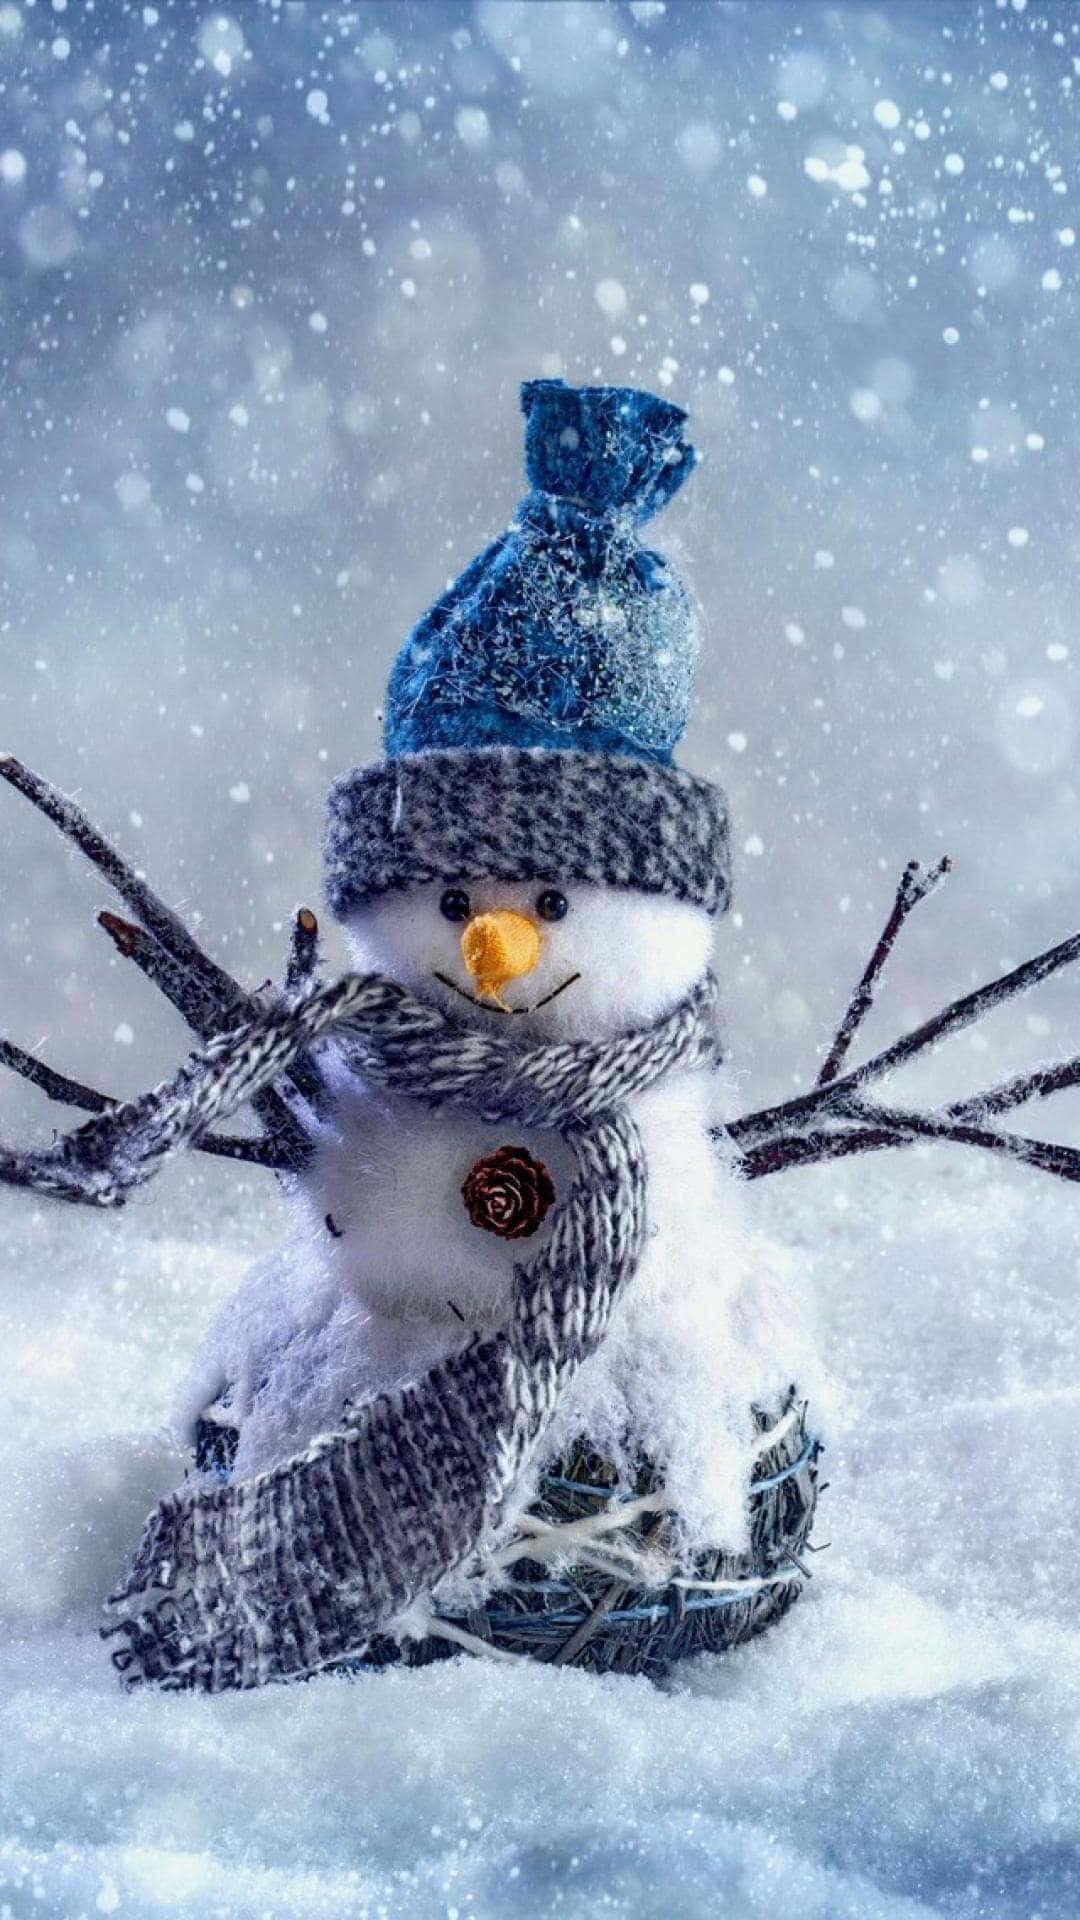 Winter Joy Snowman In Snowfall.jpg Wallpaper